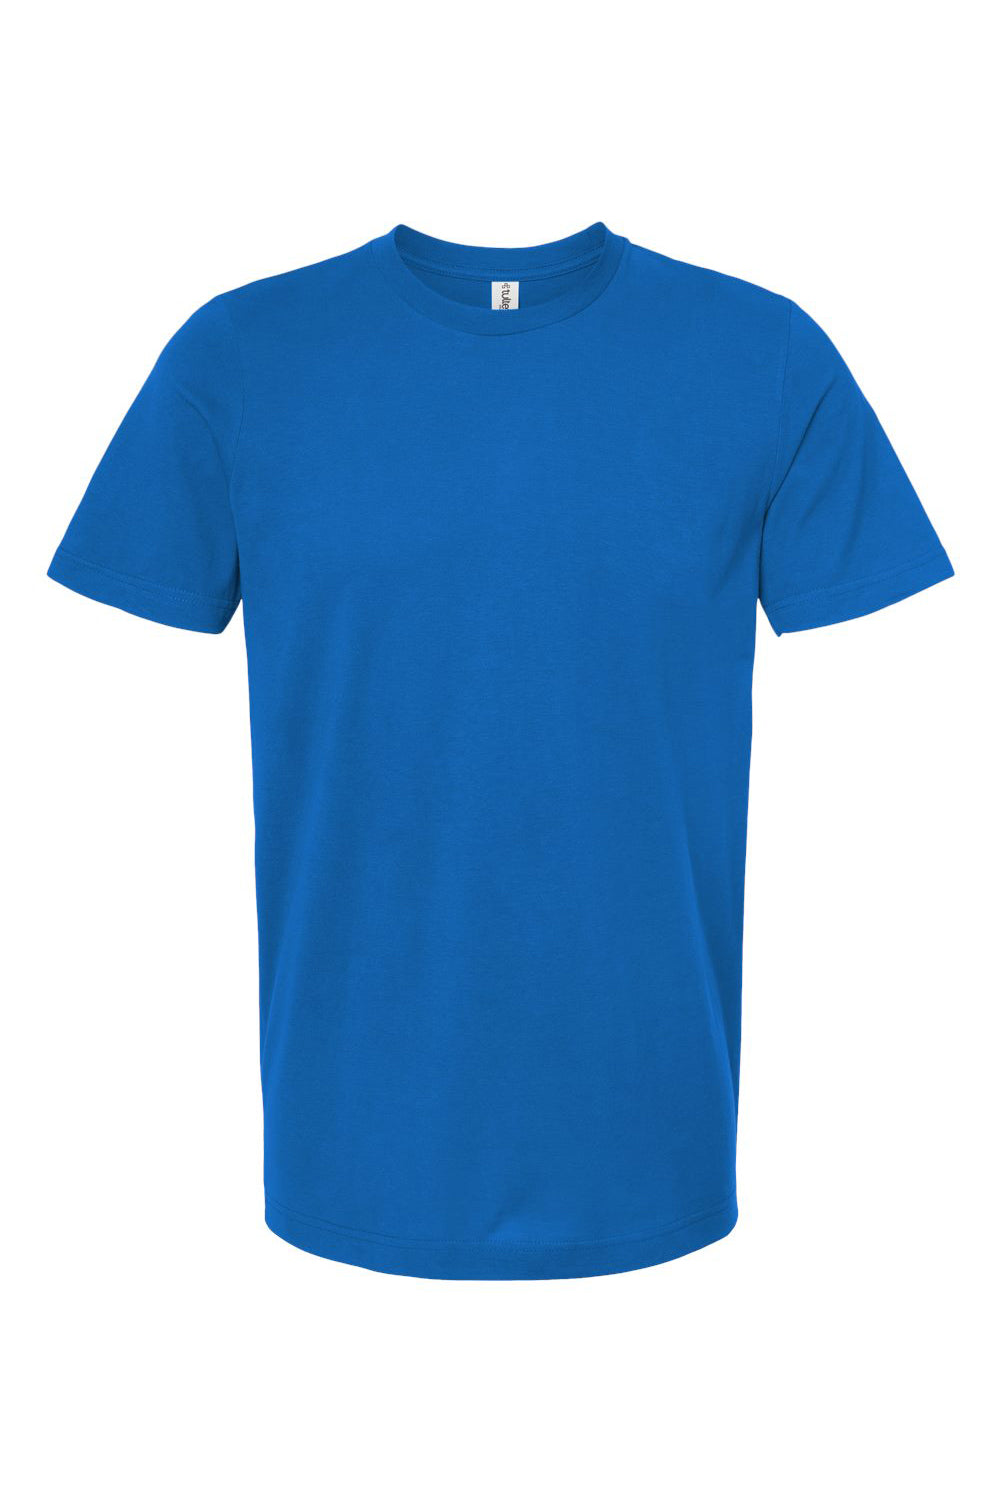 Tultex 602 Mens Short Sleeve Crewneck T-Shirt Royal Blue Flat Front